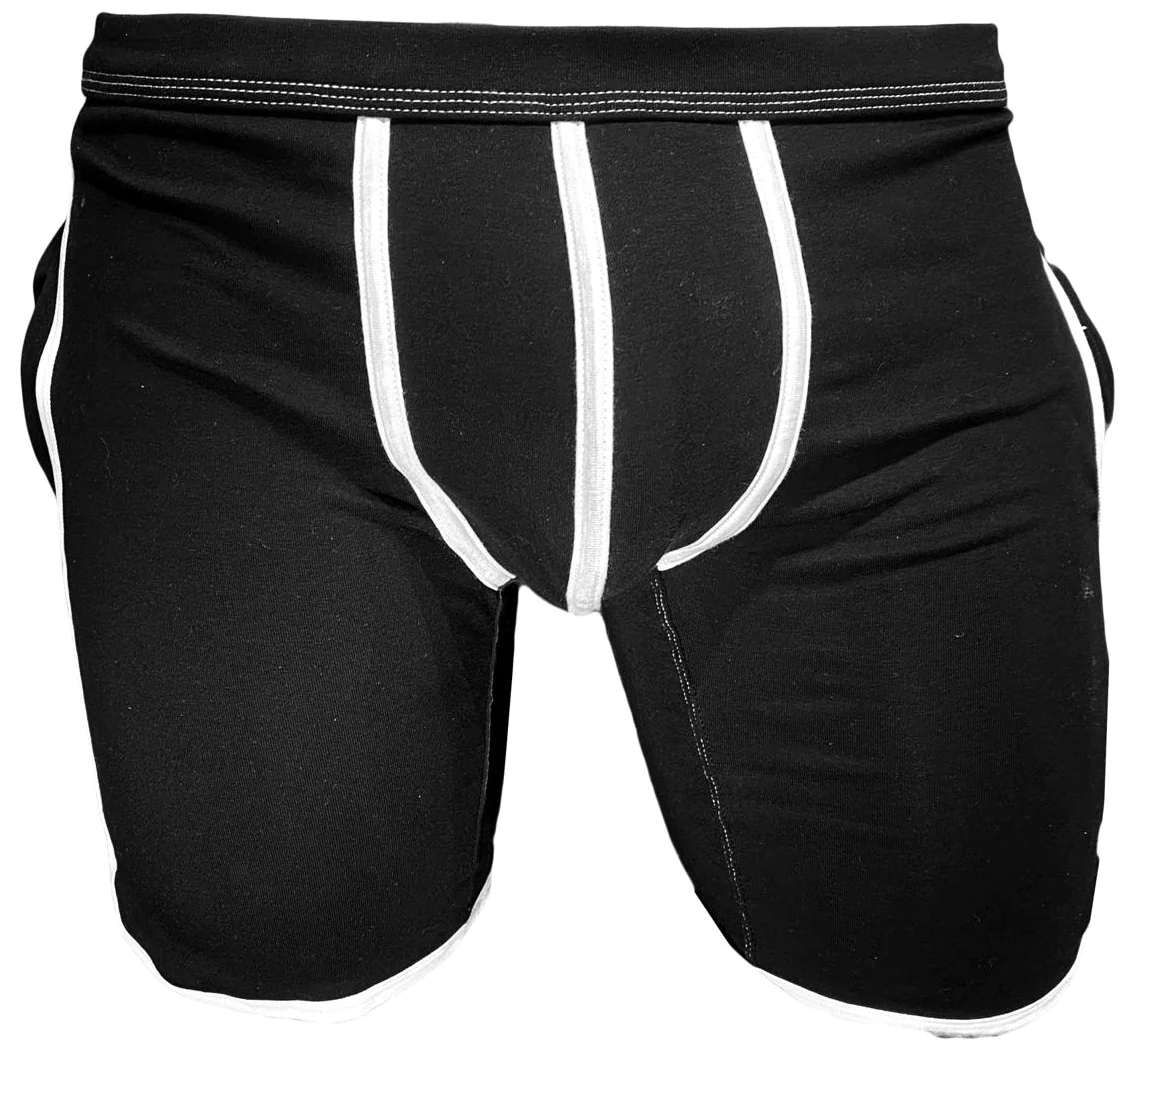 Knobs Gym Shorts w/ Contrast Trim - Black/White